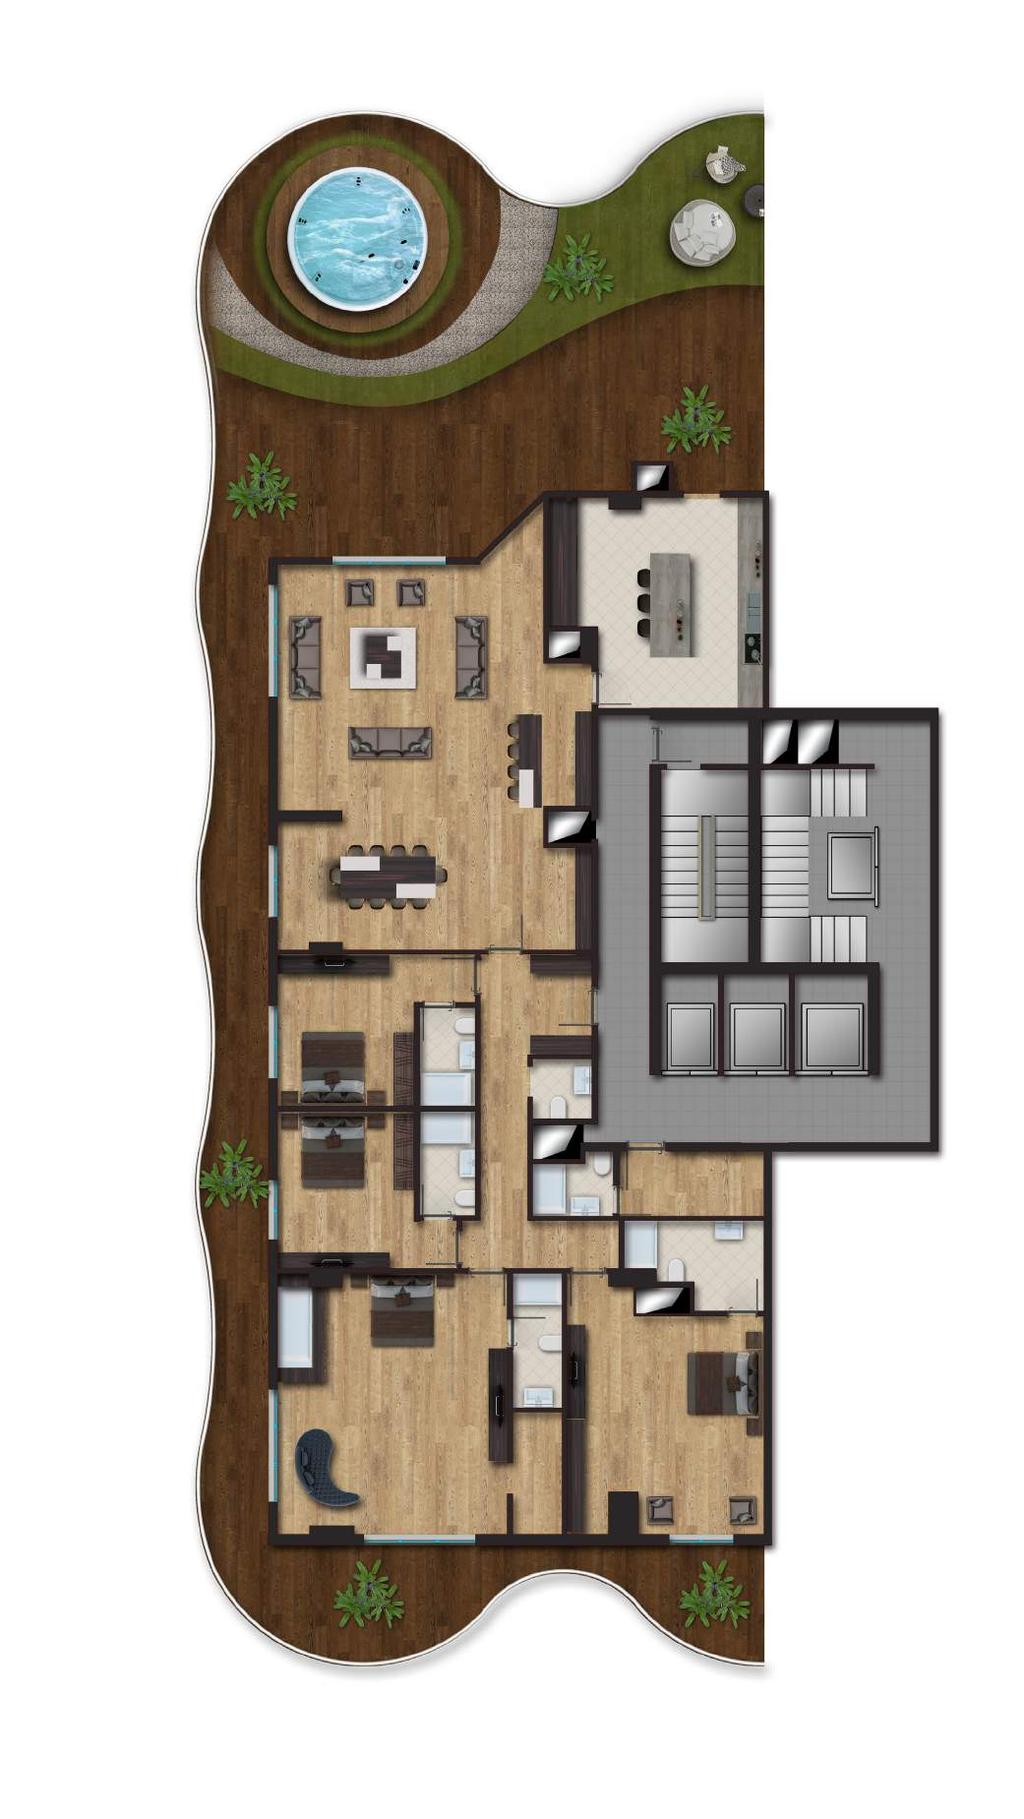 penthouse 4 Bedroom TYPE A Carpet Area : 410.43 m² Gross Area : 483.00 m² 1 Terrace 177.00 m² 2 Living Room 69.71 m² 3 Kitchen 22.68 m² 1 4 Bedroom 14.65 m² 5 Bathroom 3.46 m² 3 6 Bedroom 13.